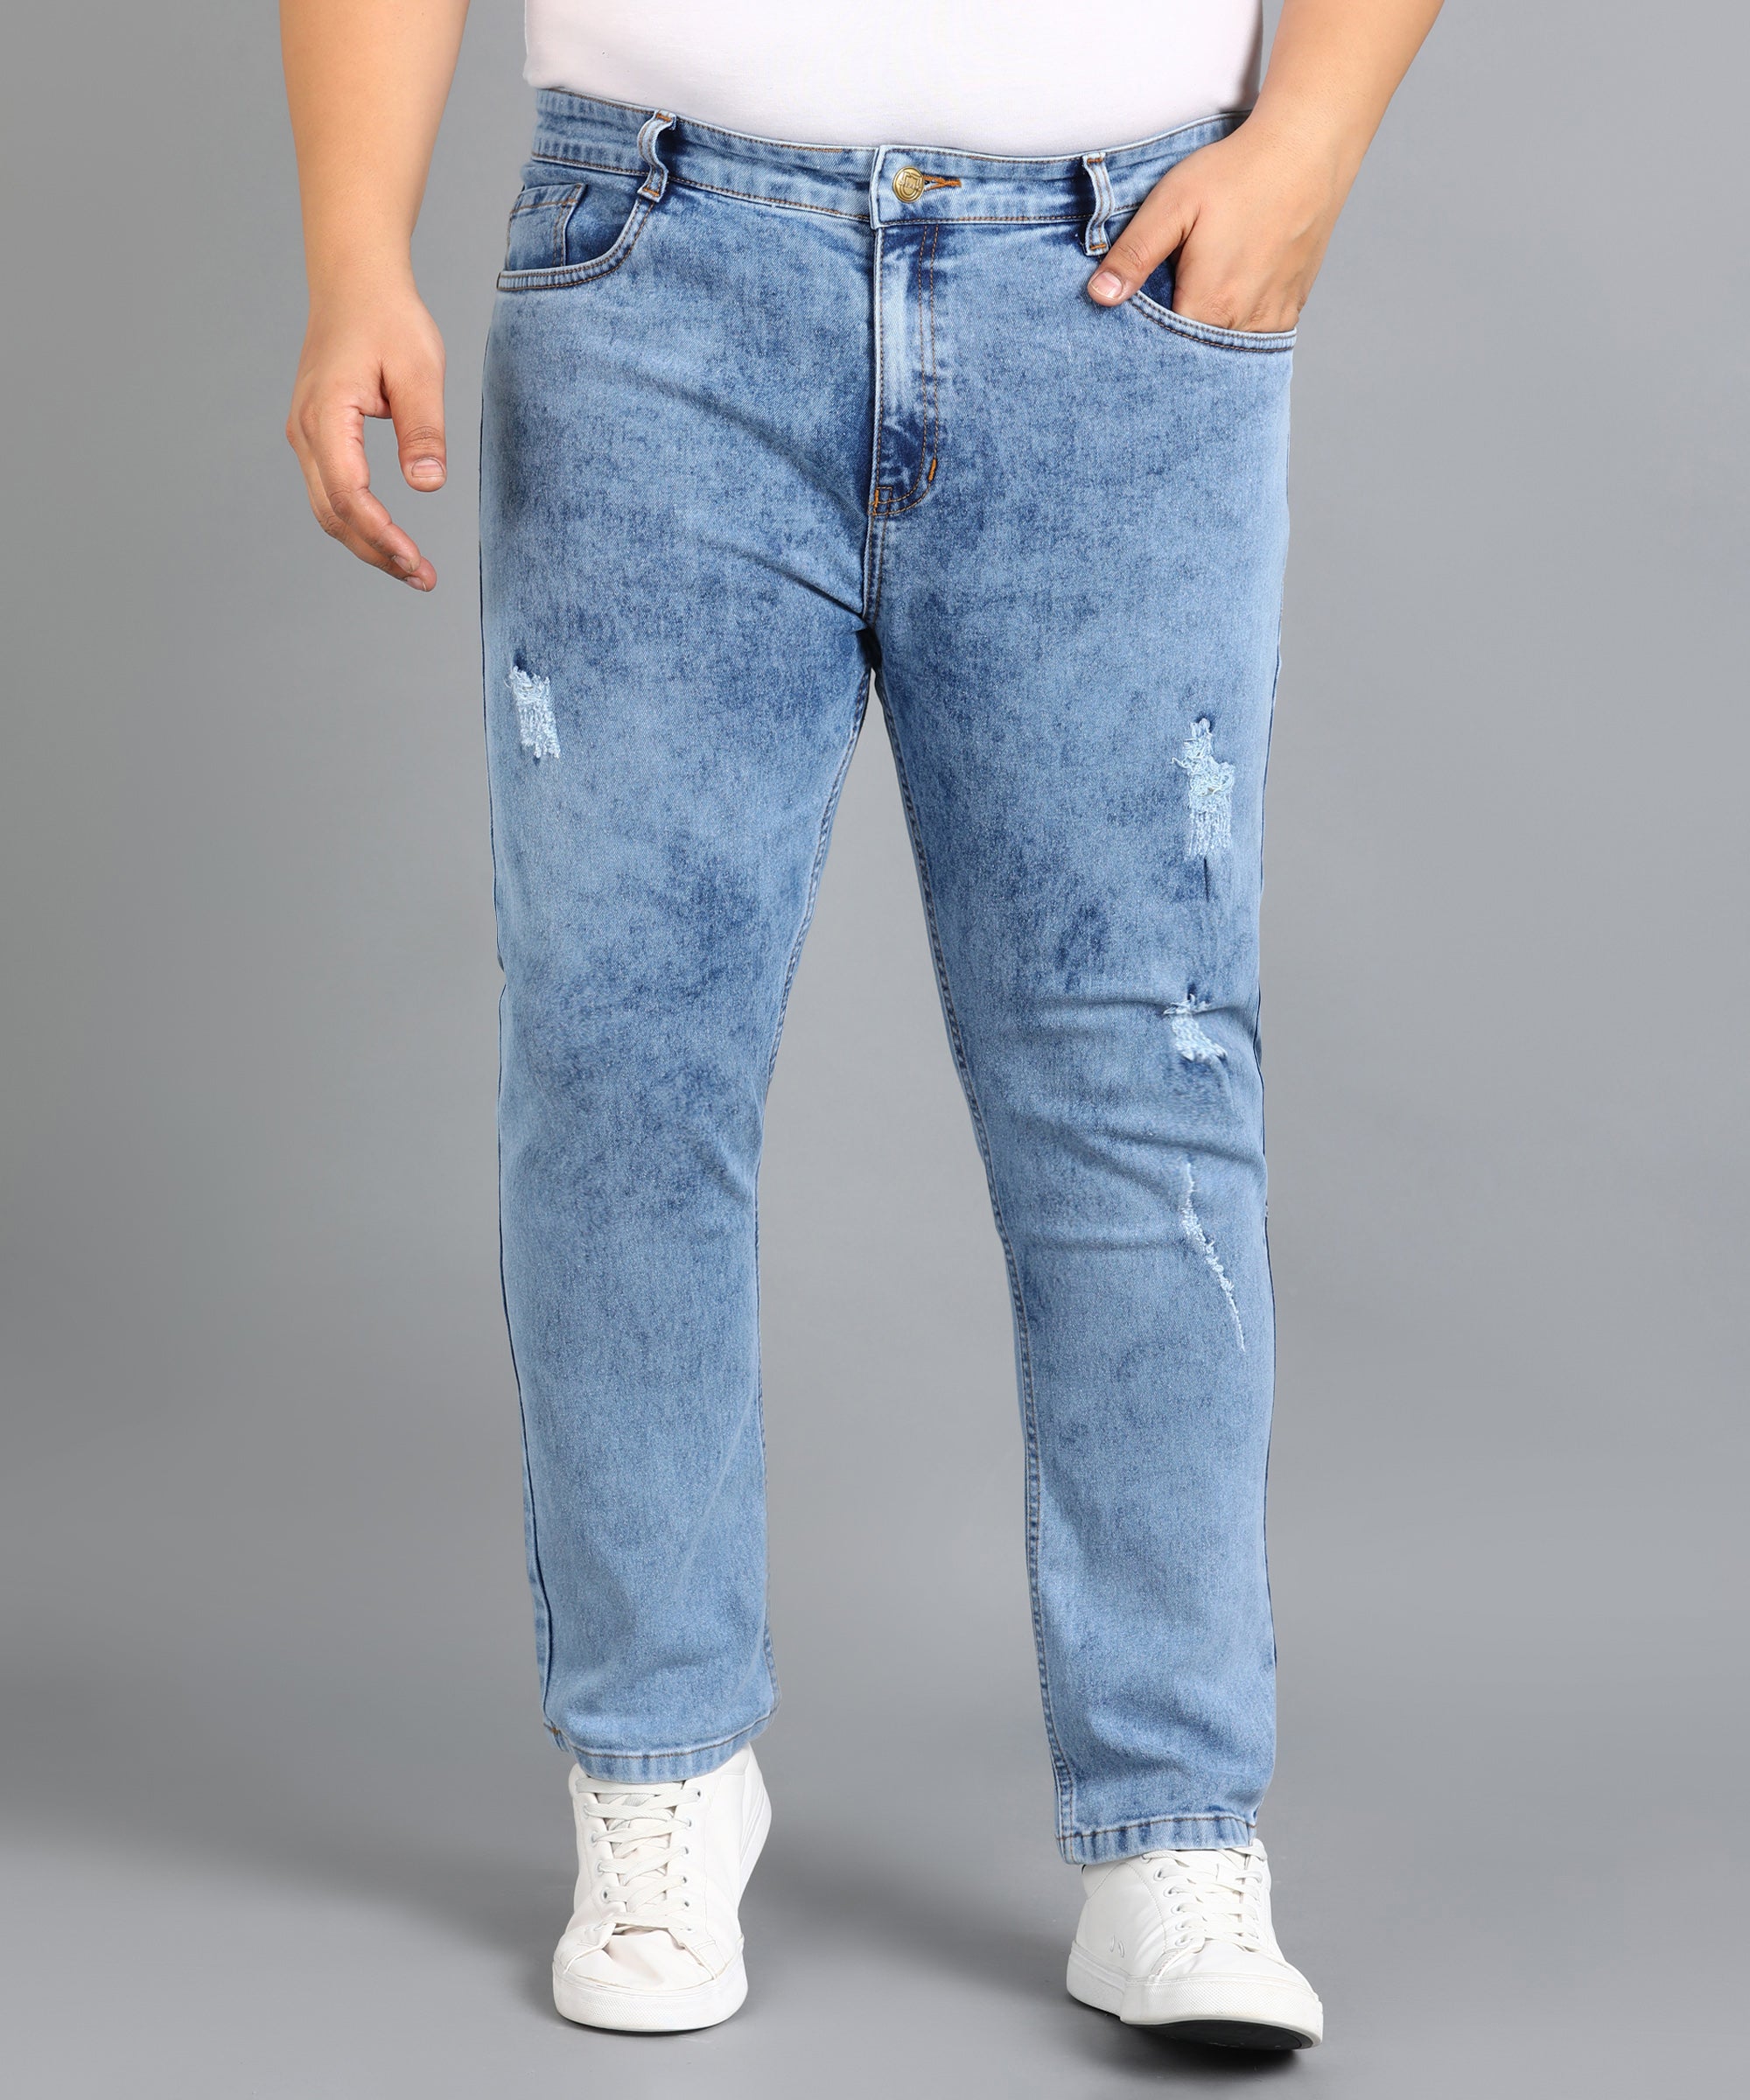 Plus Men's Sky Blue Slim Fit Washed Mild Distressed/Torn Jeans Stretchable